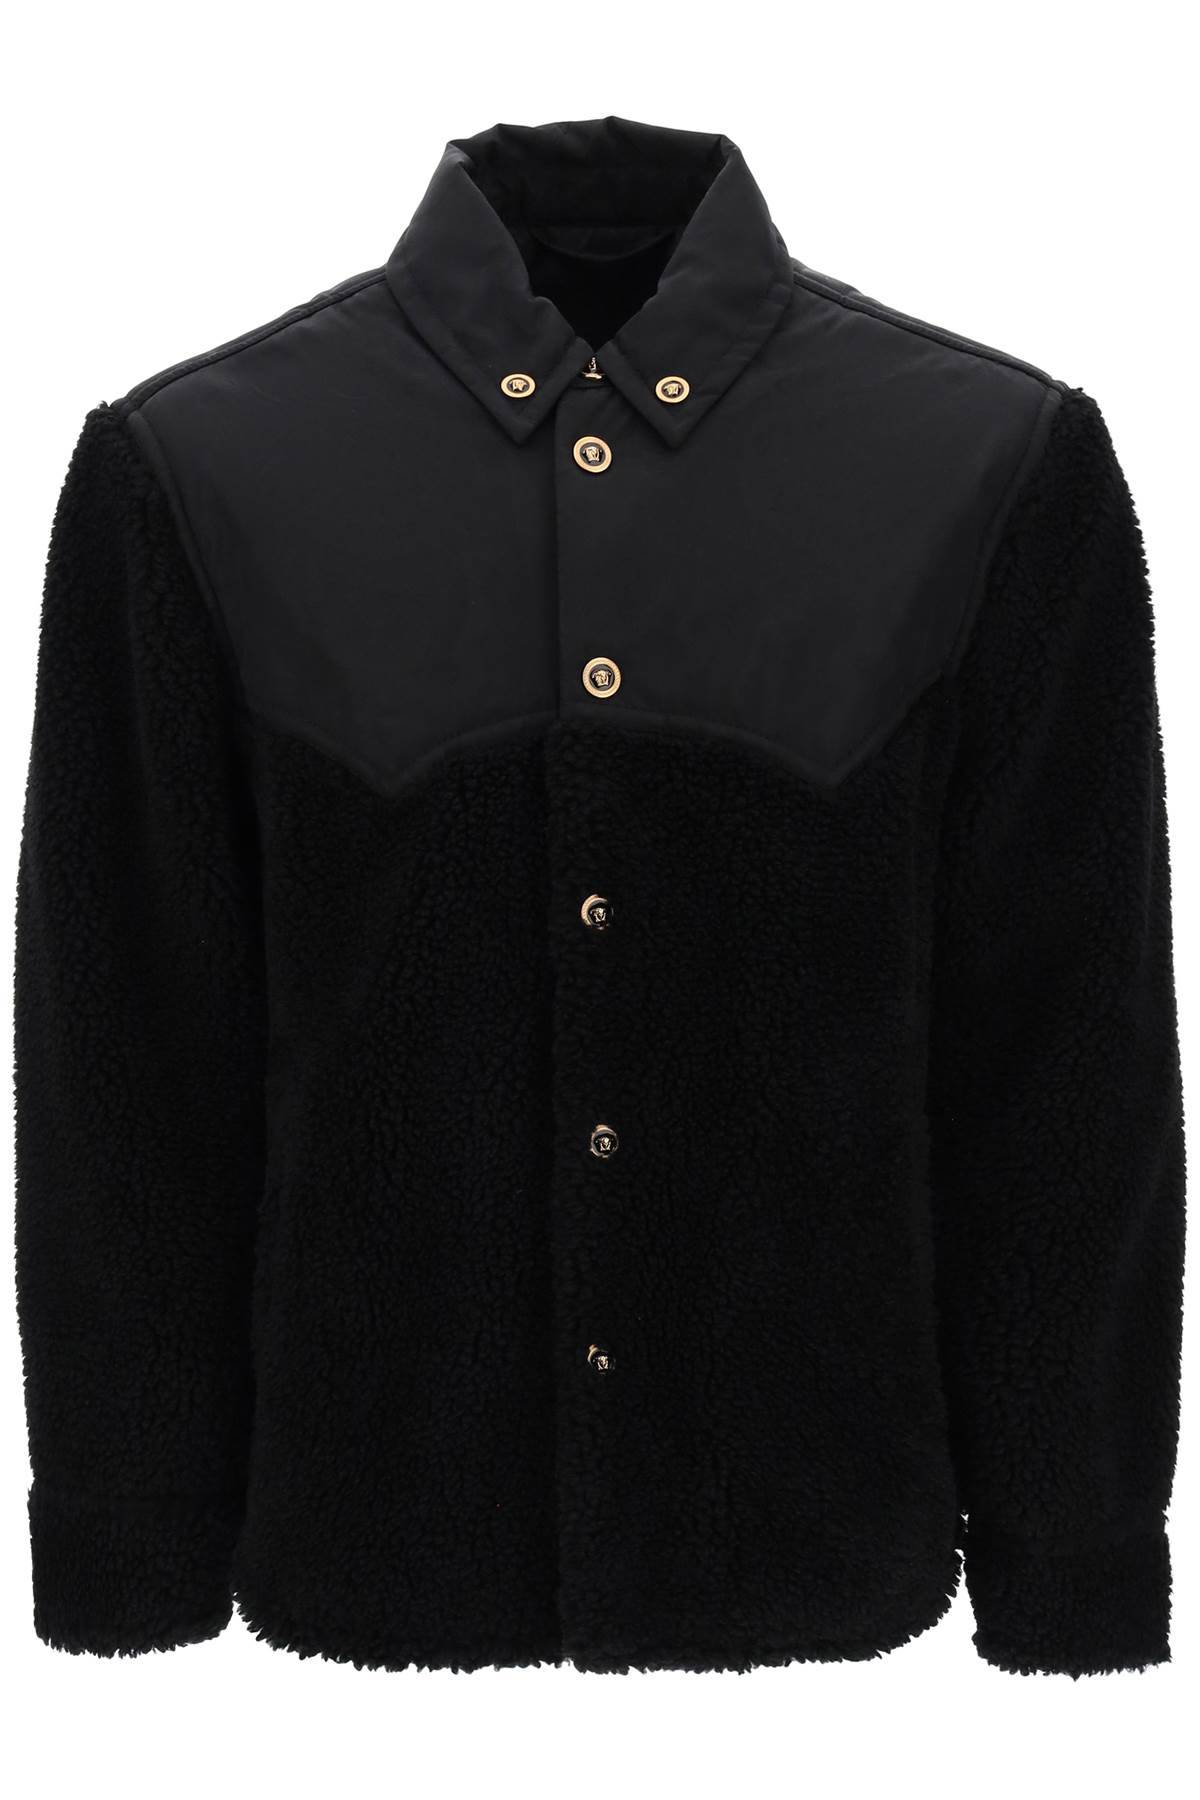 Versace VERSACE barocco silhouette fleece jacket